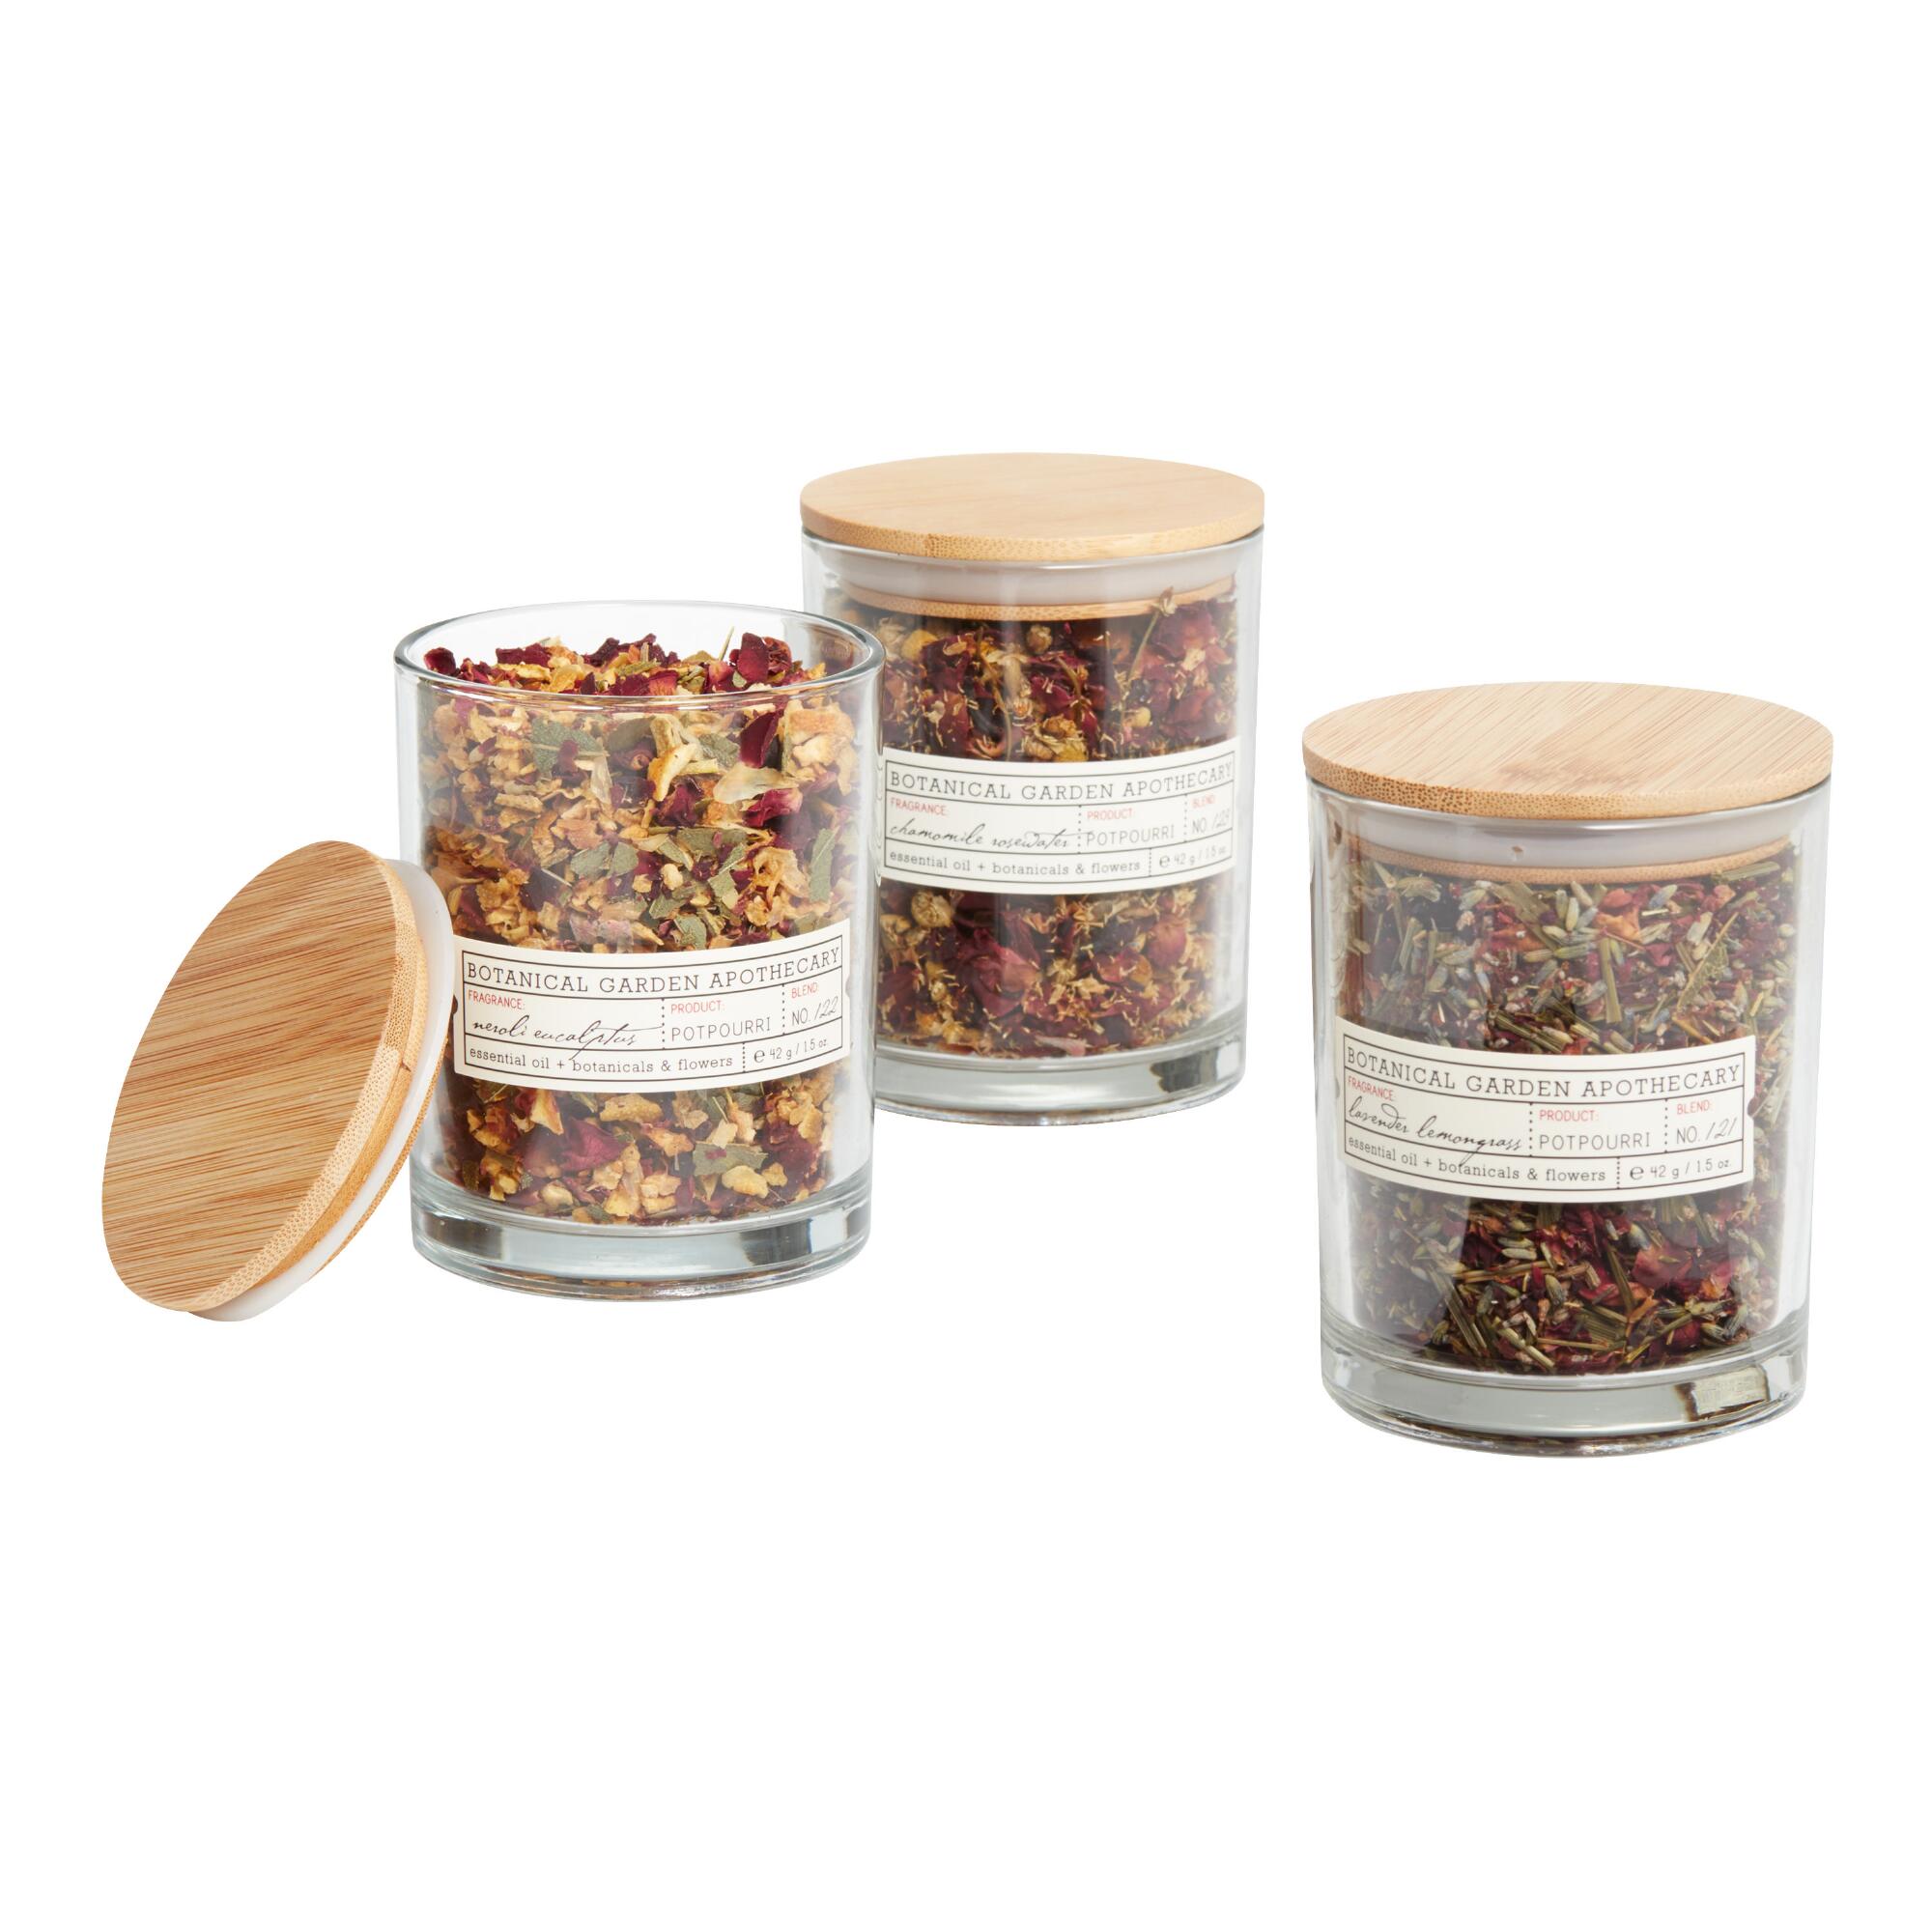 Botanical Garden Apothecary Potpourri Jar Collection by World Market